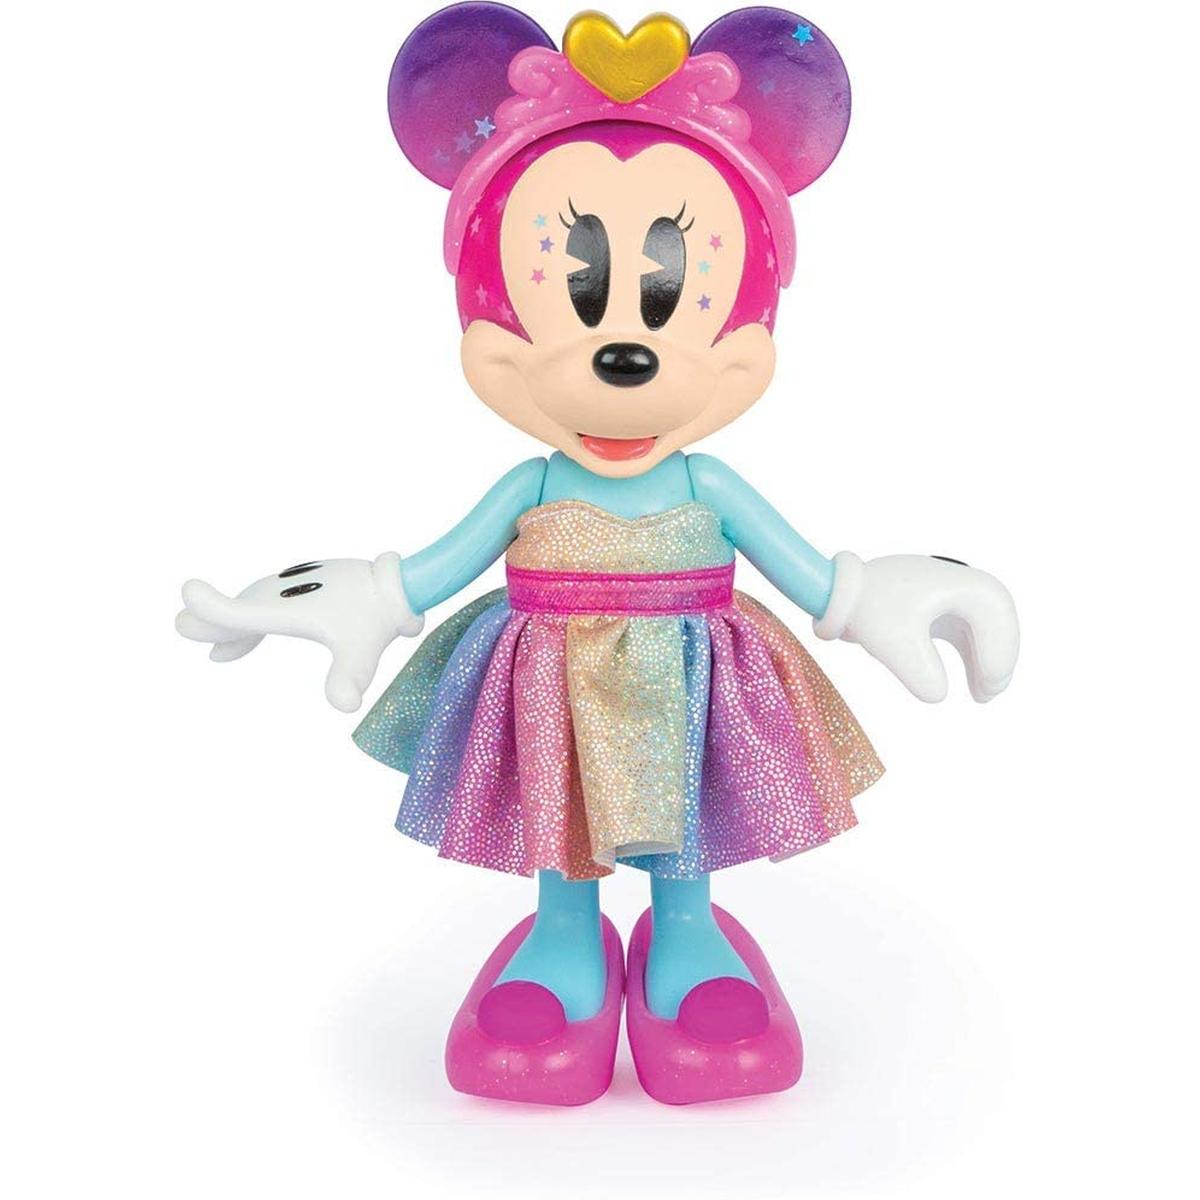 Minnie Mouse - Muñeca Minnie Fashion Crystal Sparkle | Minnie Mouse. Cat 54  | Toys"R"Us España